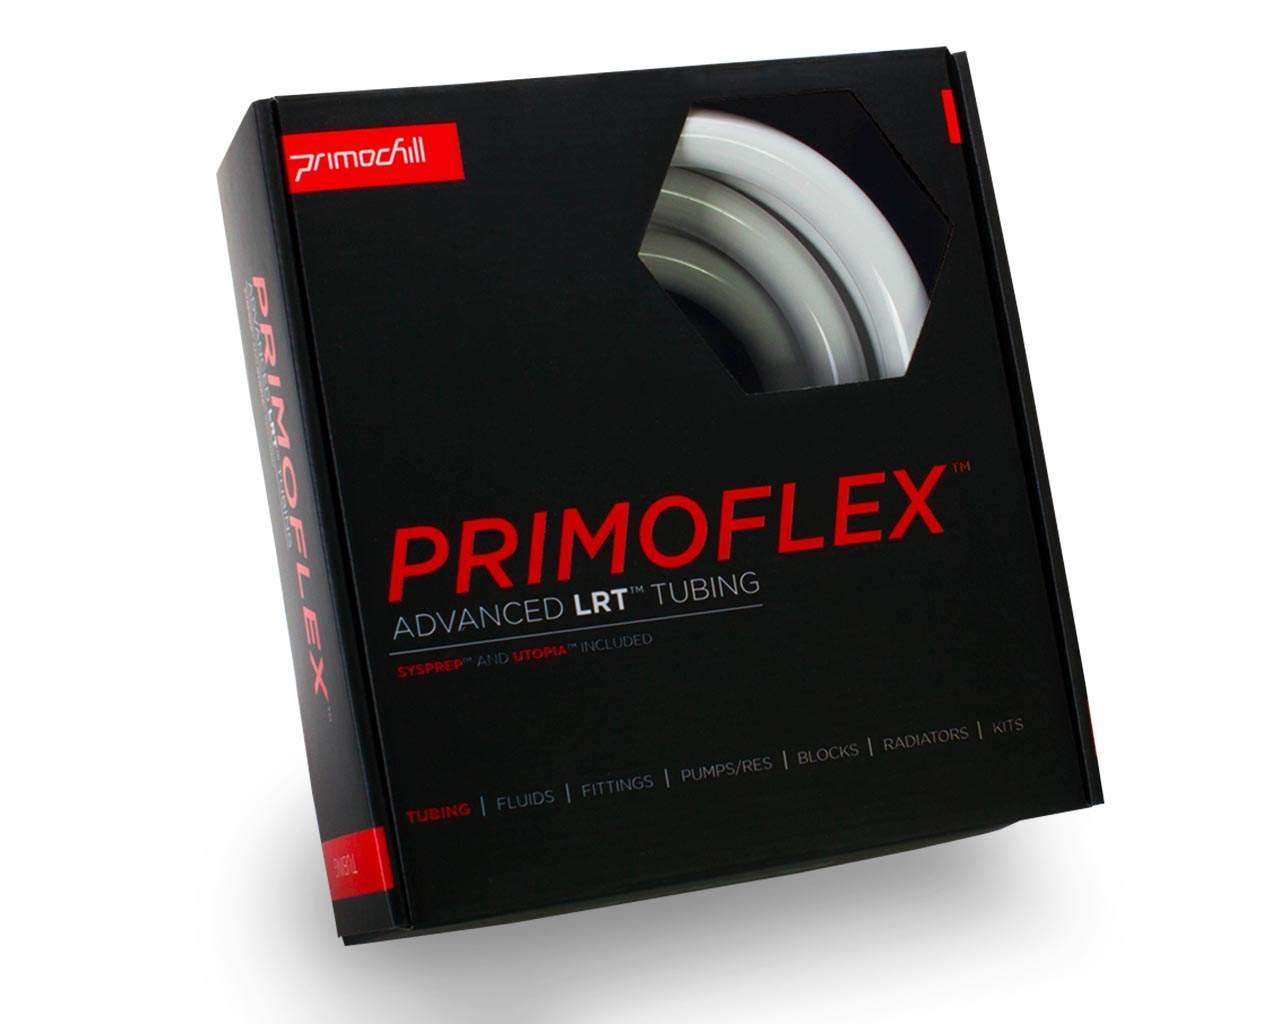 PrimoFlex Advanced LRT Soft Flexible Tubing -1/2in.ID x 3/4in.OD, 10 feet - PrimoChill - KEEPING IT COOL Elegant White